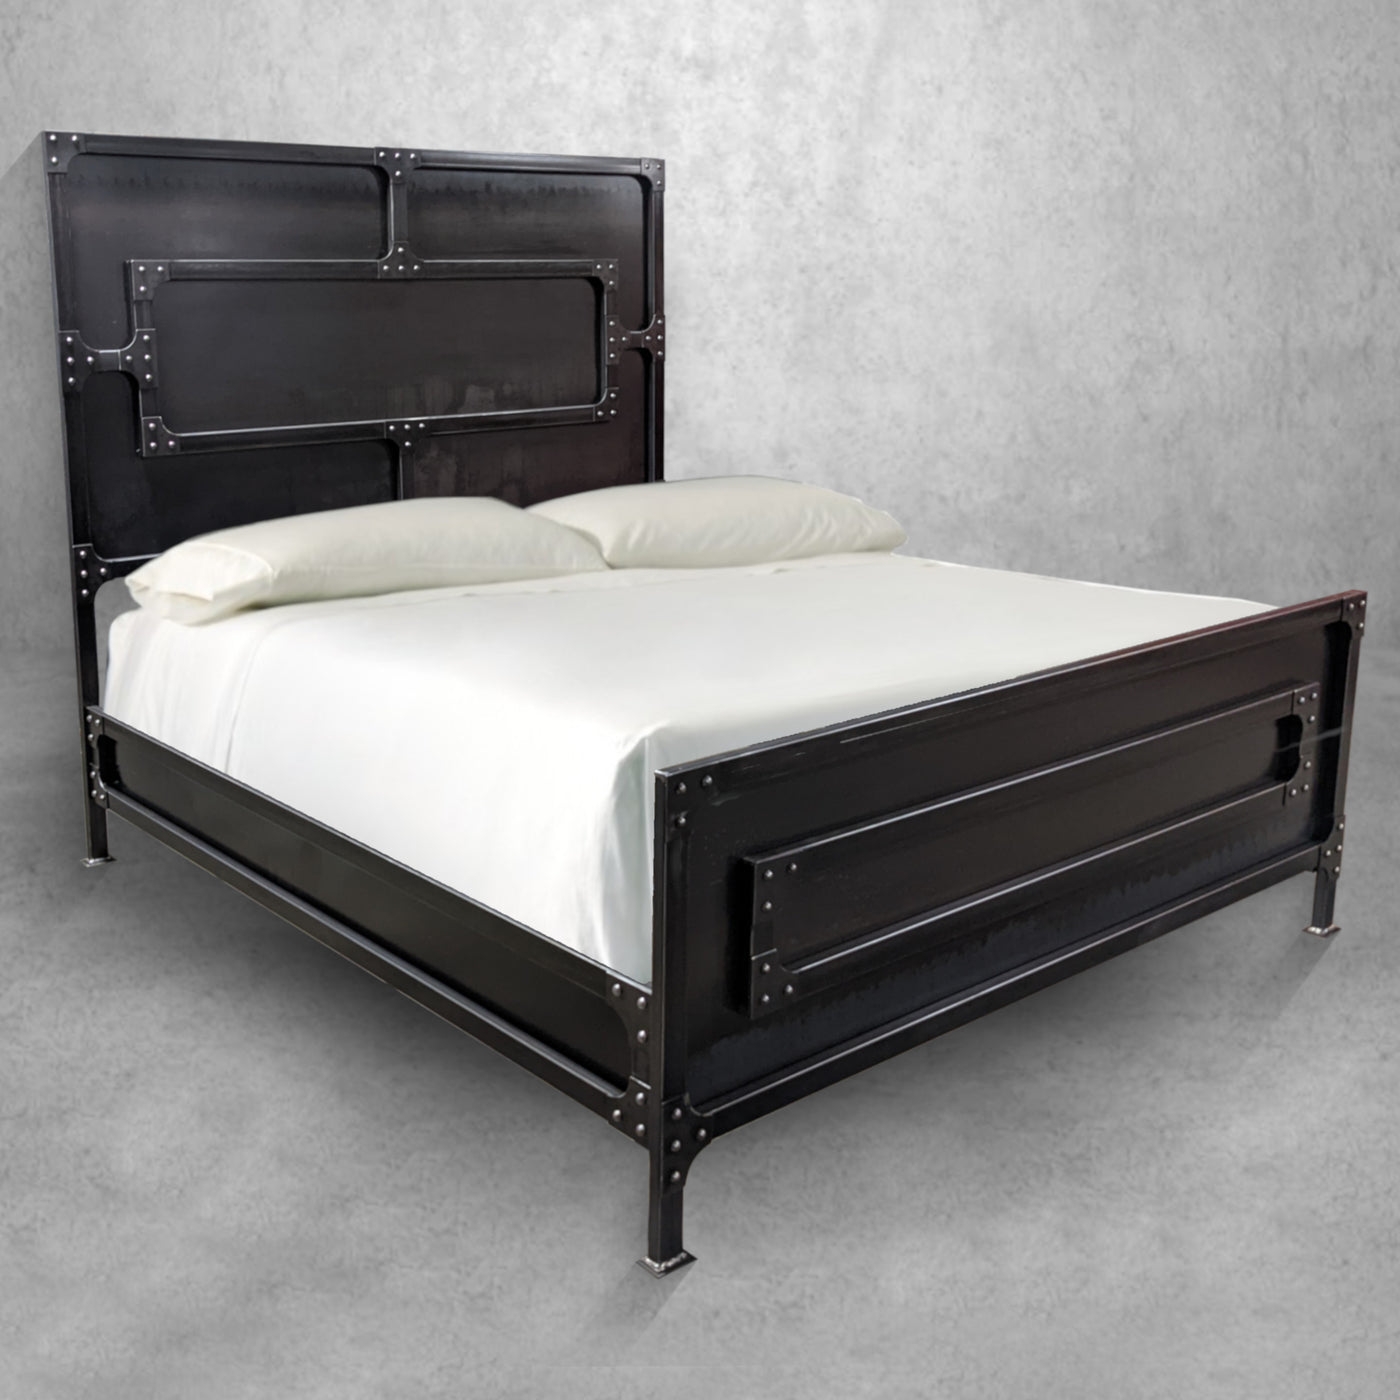 GrandView Steel Bed (tall version)